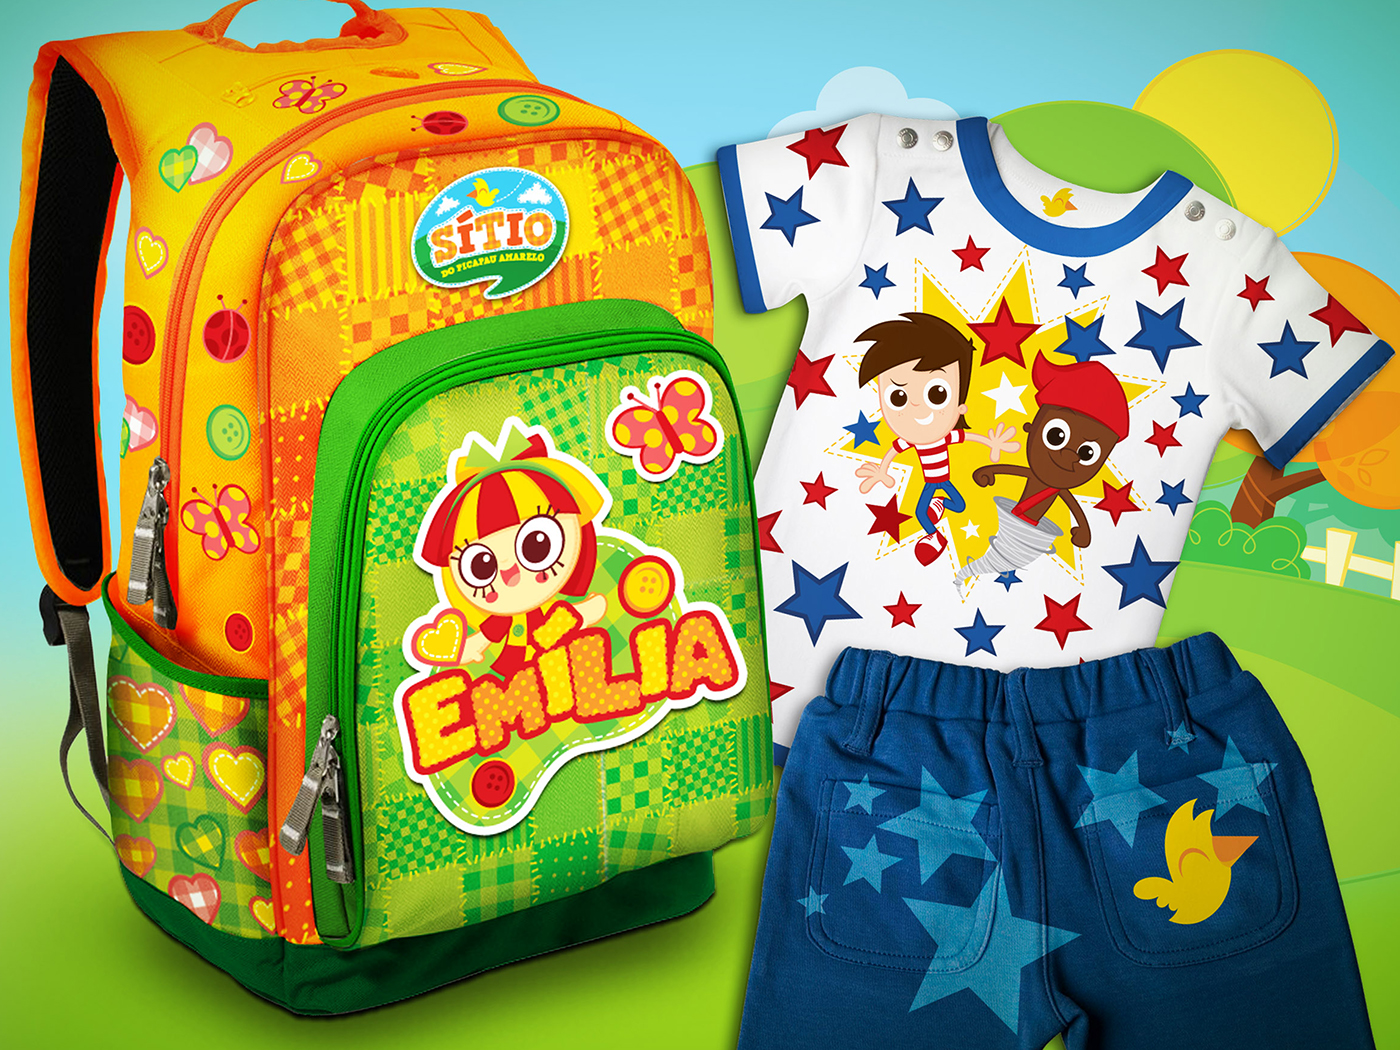 kids Brasil Brazil colorful children colours products Consumer guidelines brand book tv show tv program tv video licensing